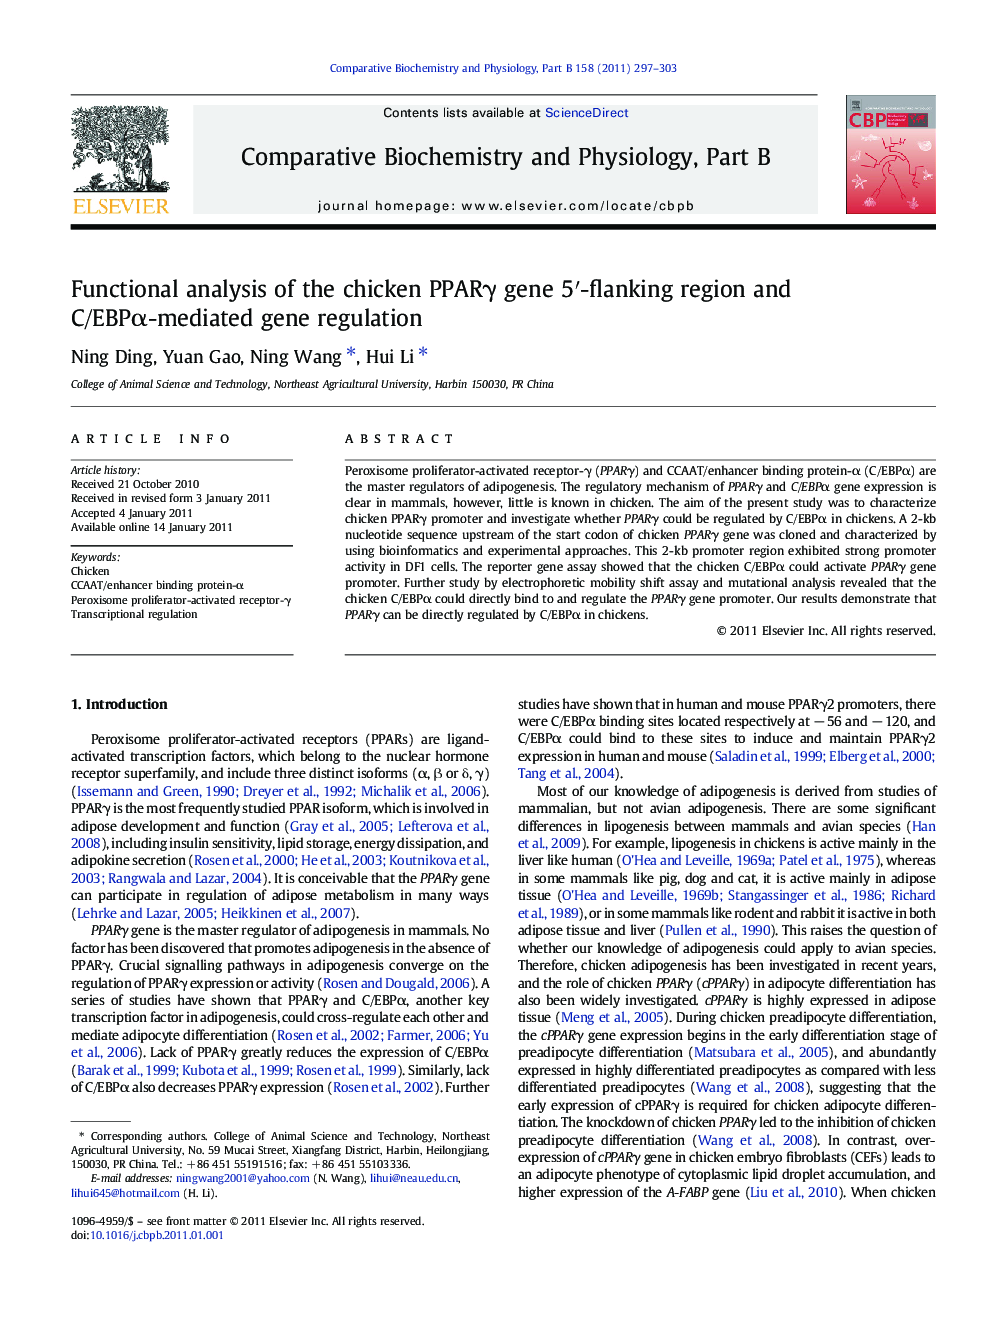 Functional analysis of the chicken PPARγ gene 5′-flanking region and C/EBPα-mediated gene regulation